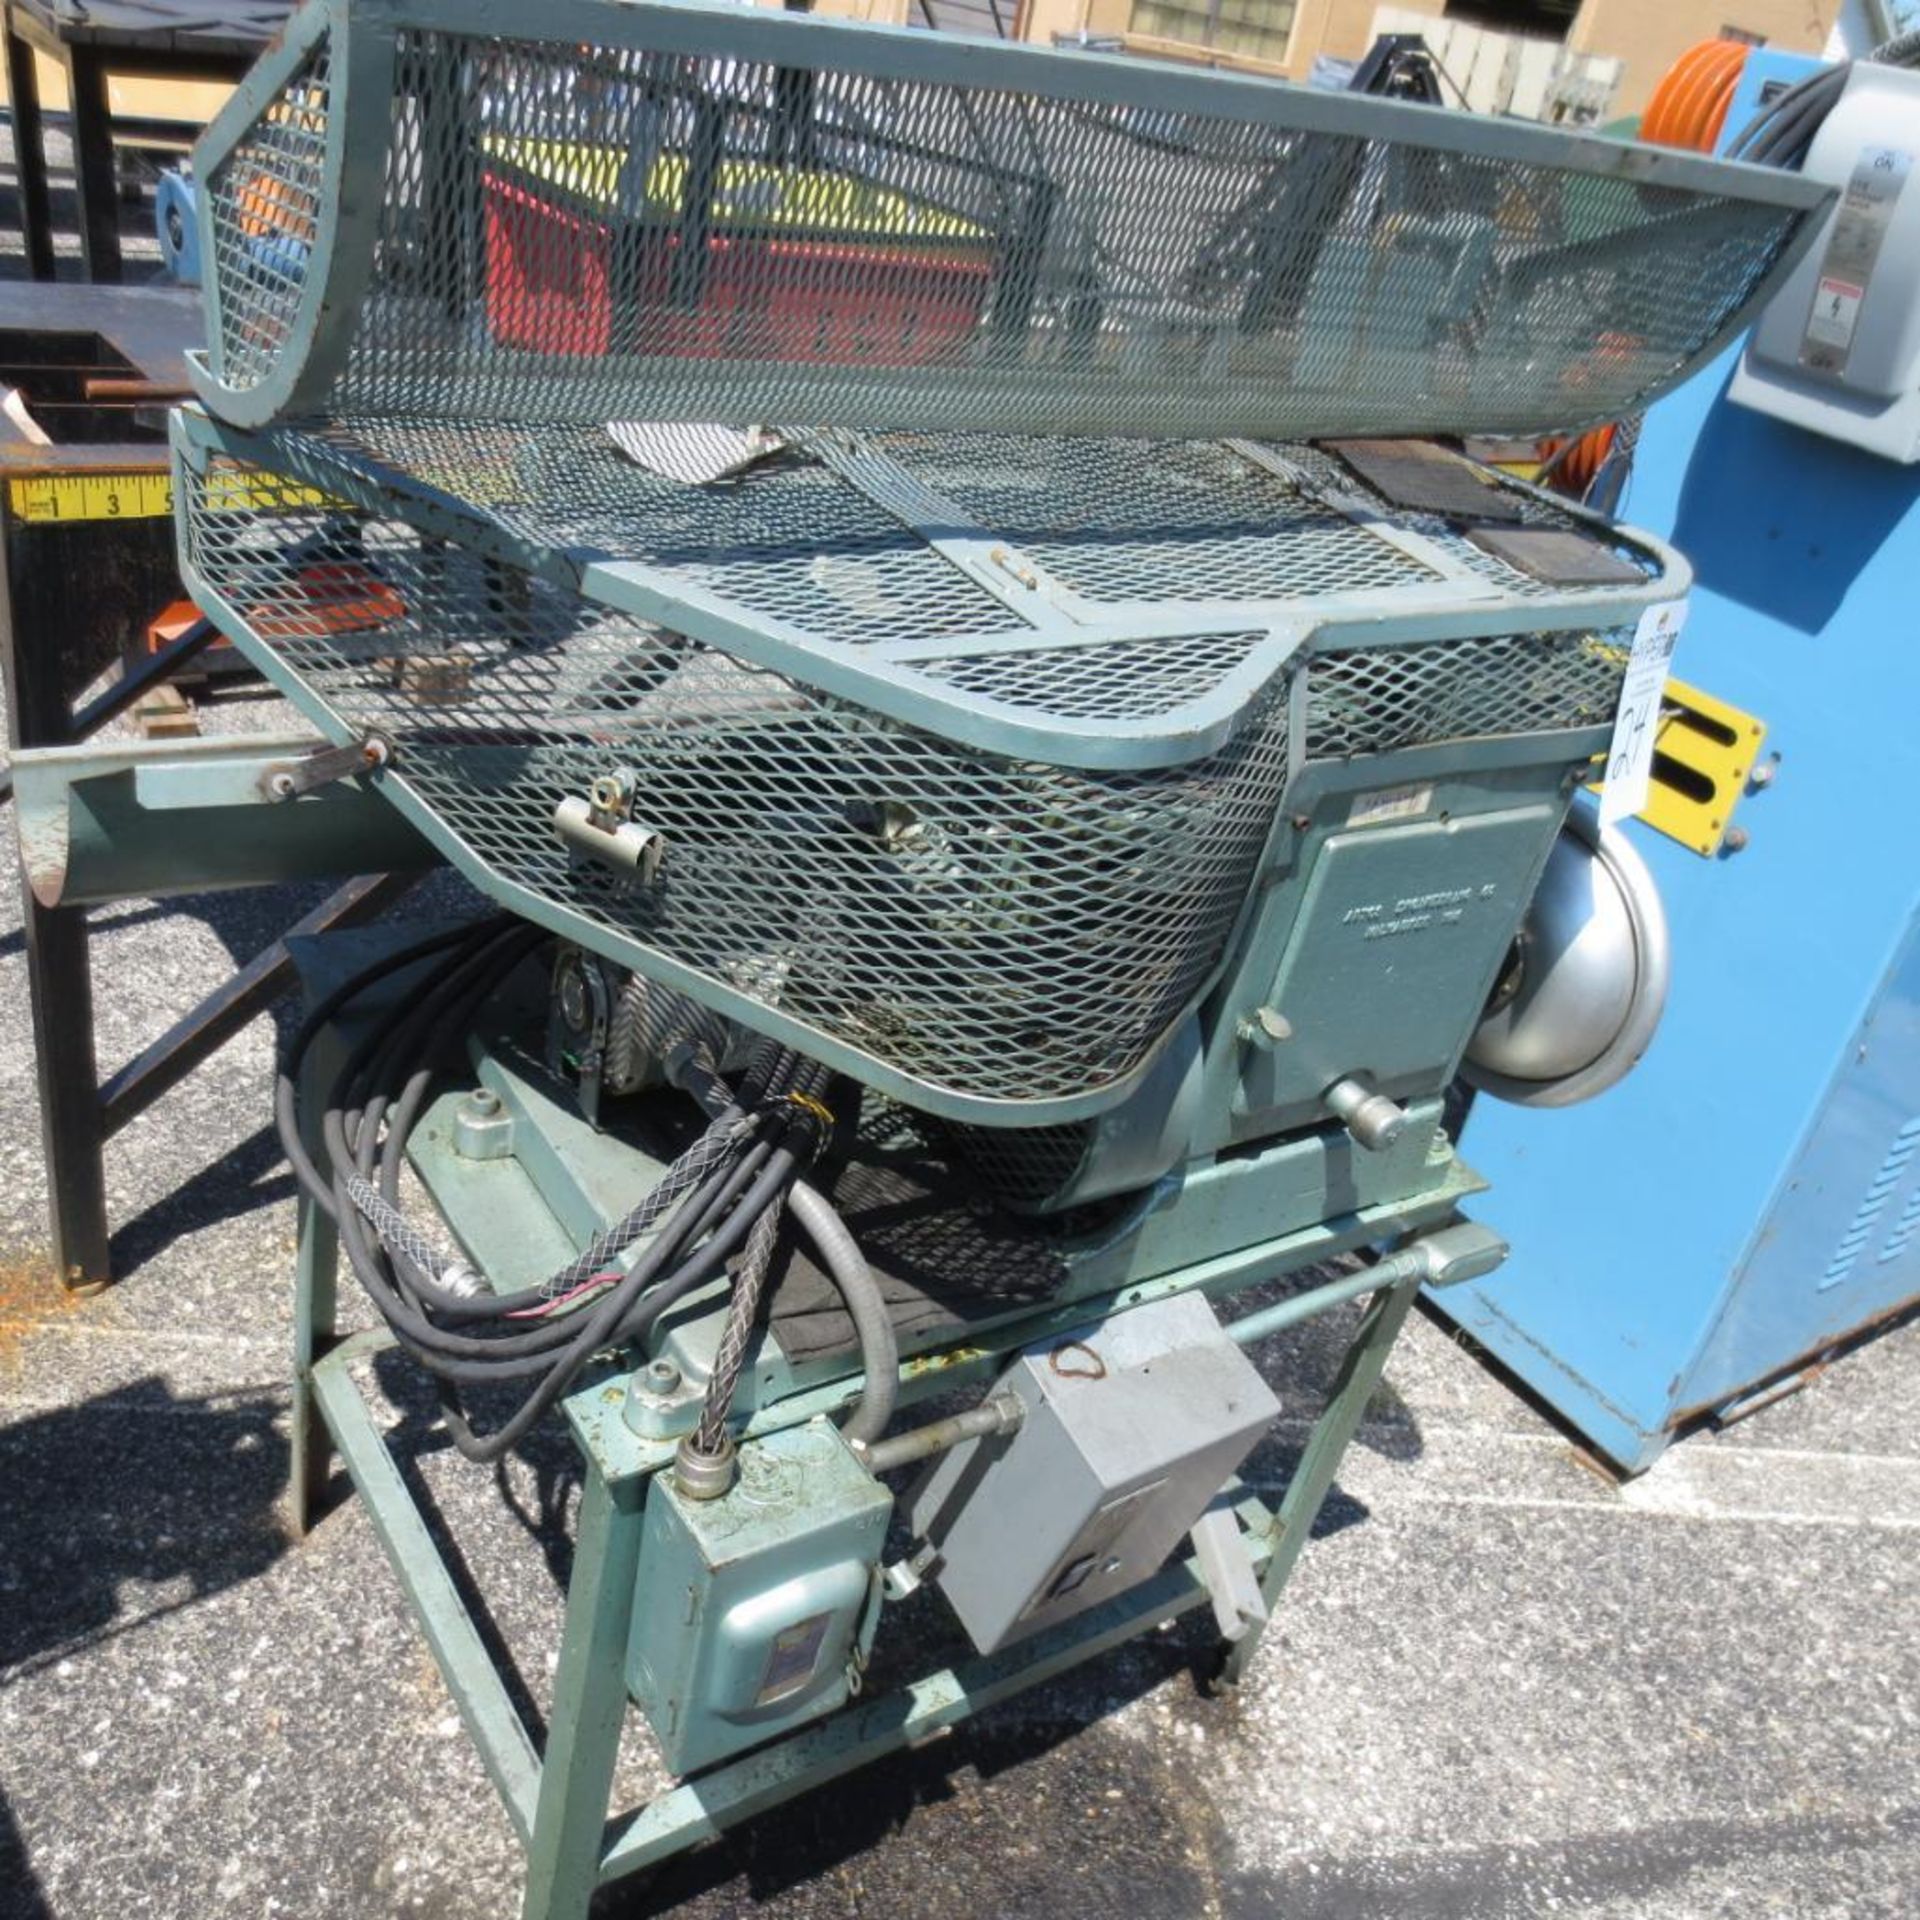 Artos C56 Wire Cutting Machine located at 707 Burlington Ave Logansport, IN 46947 - Image 3 of 3